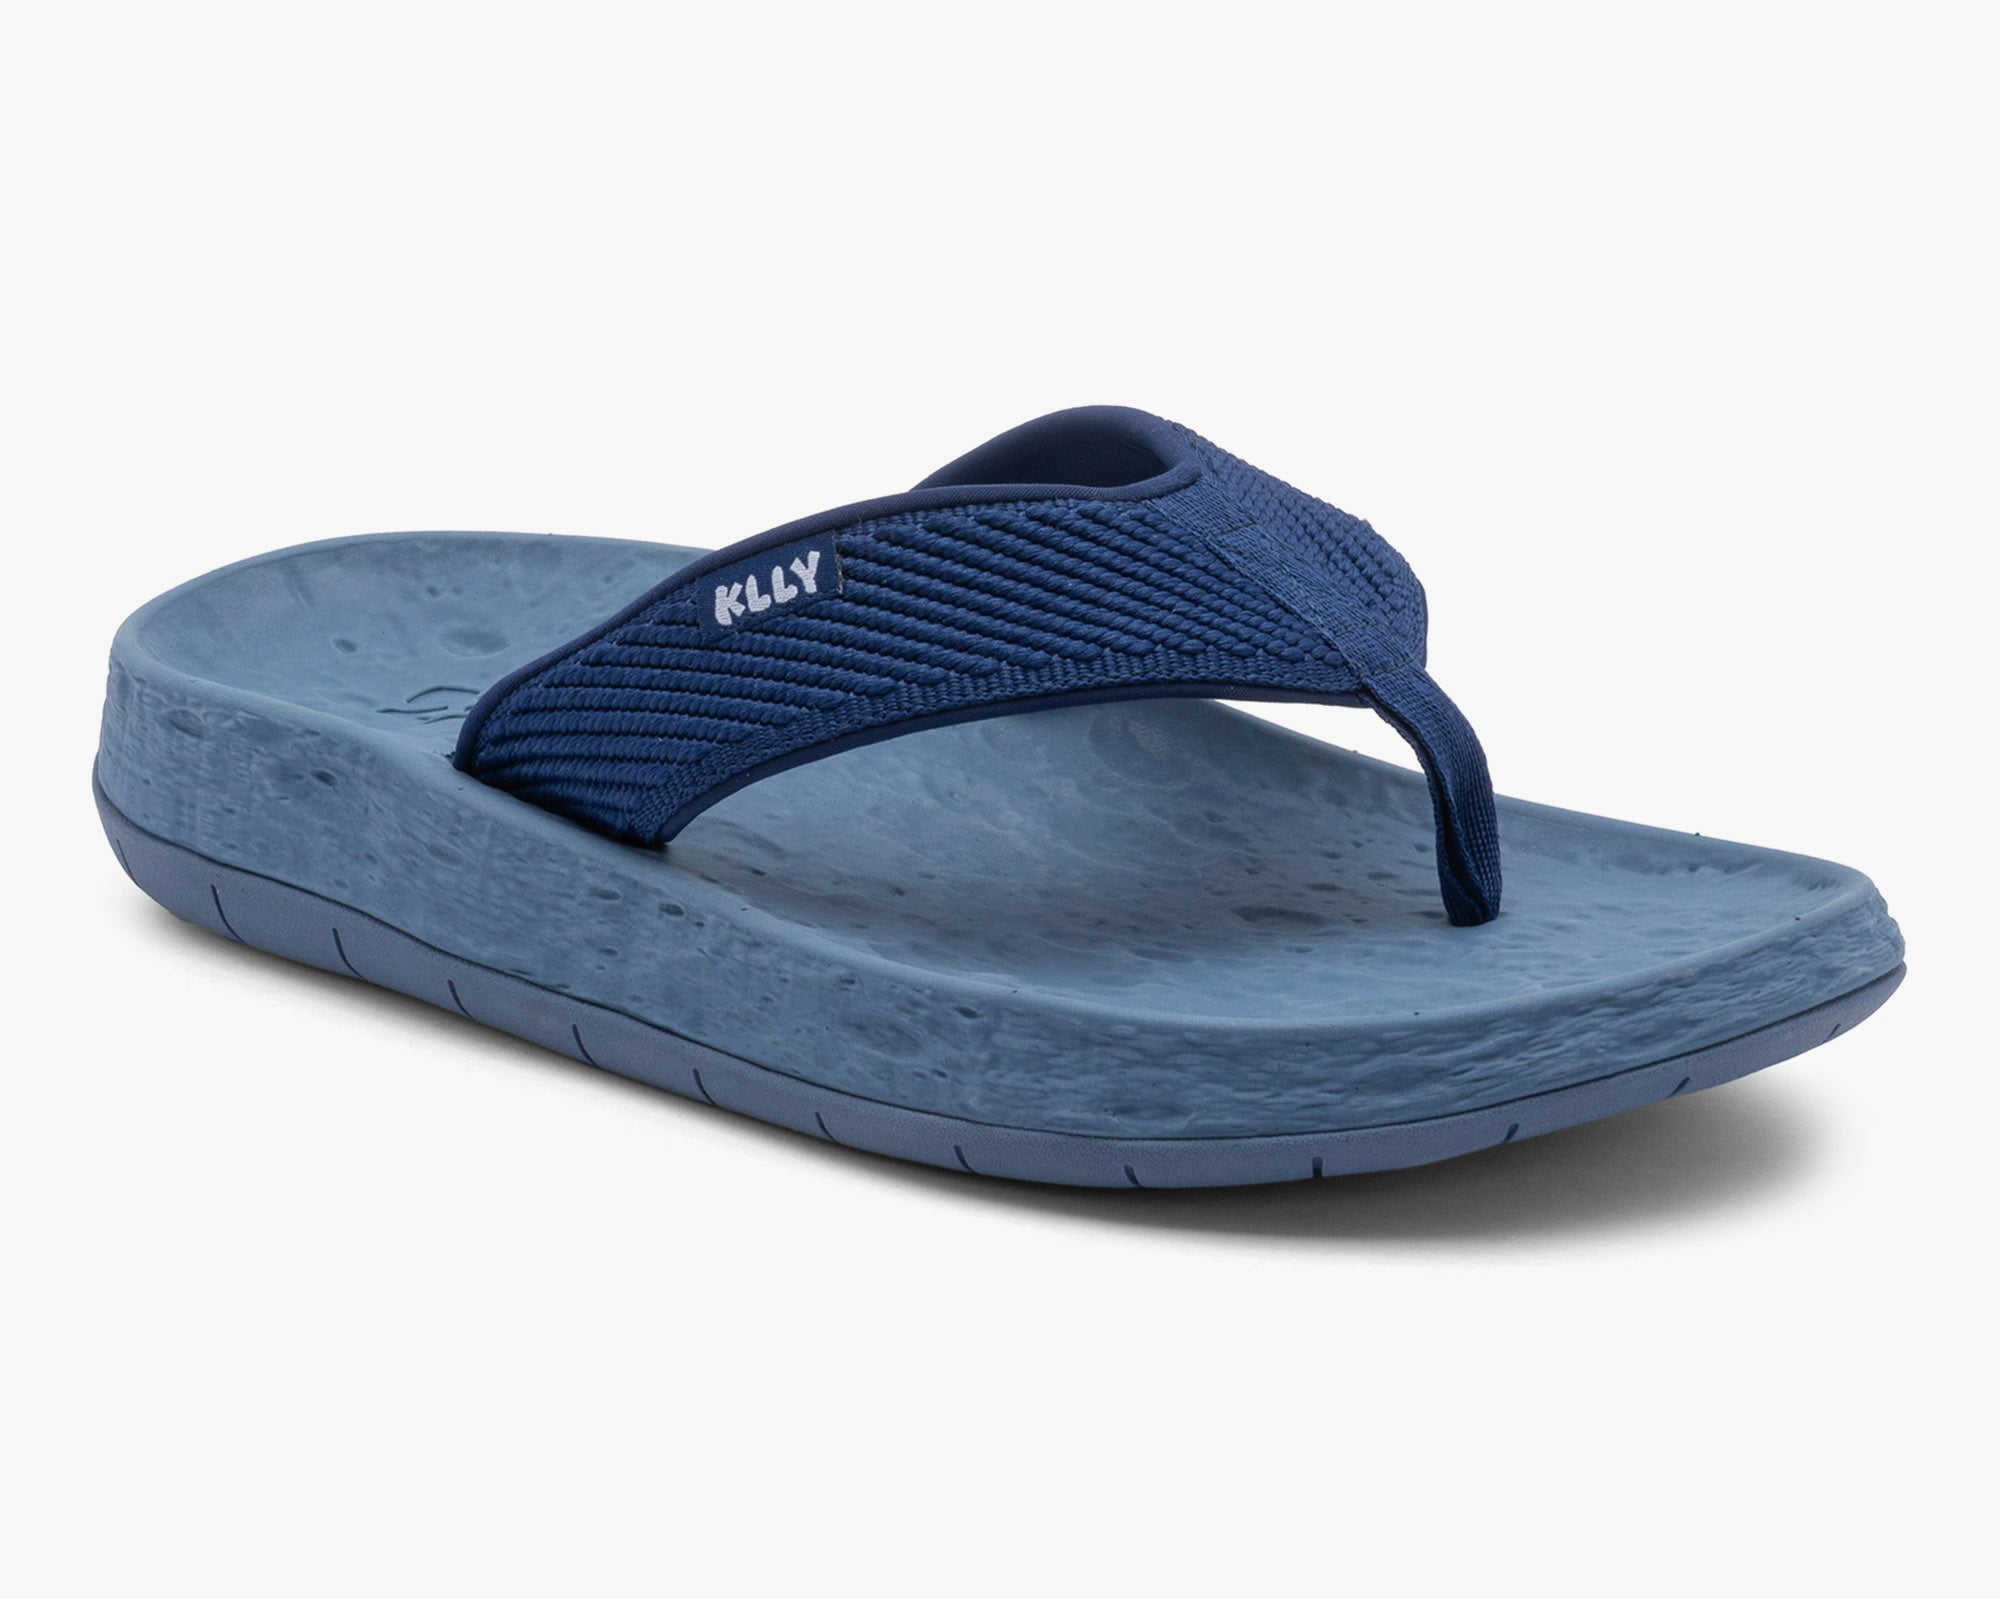 Flip flops men’s - klly sandals blue moon